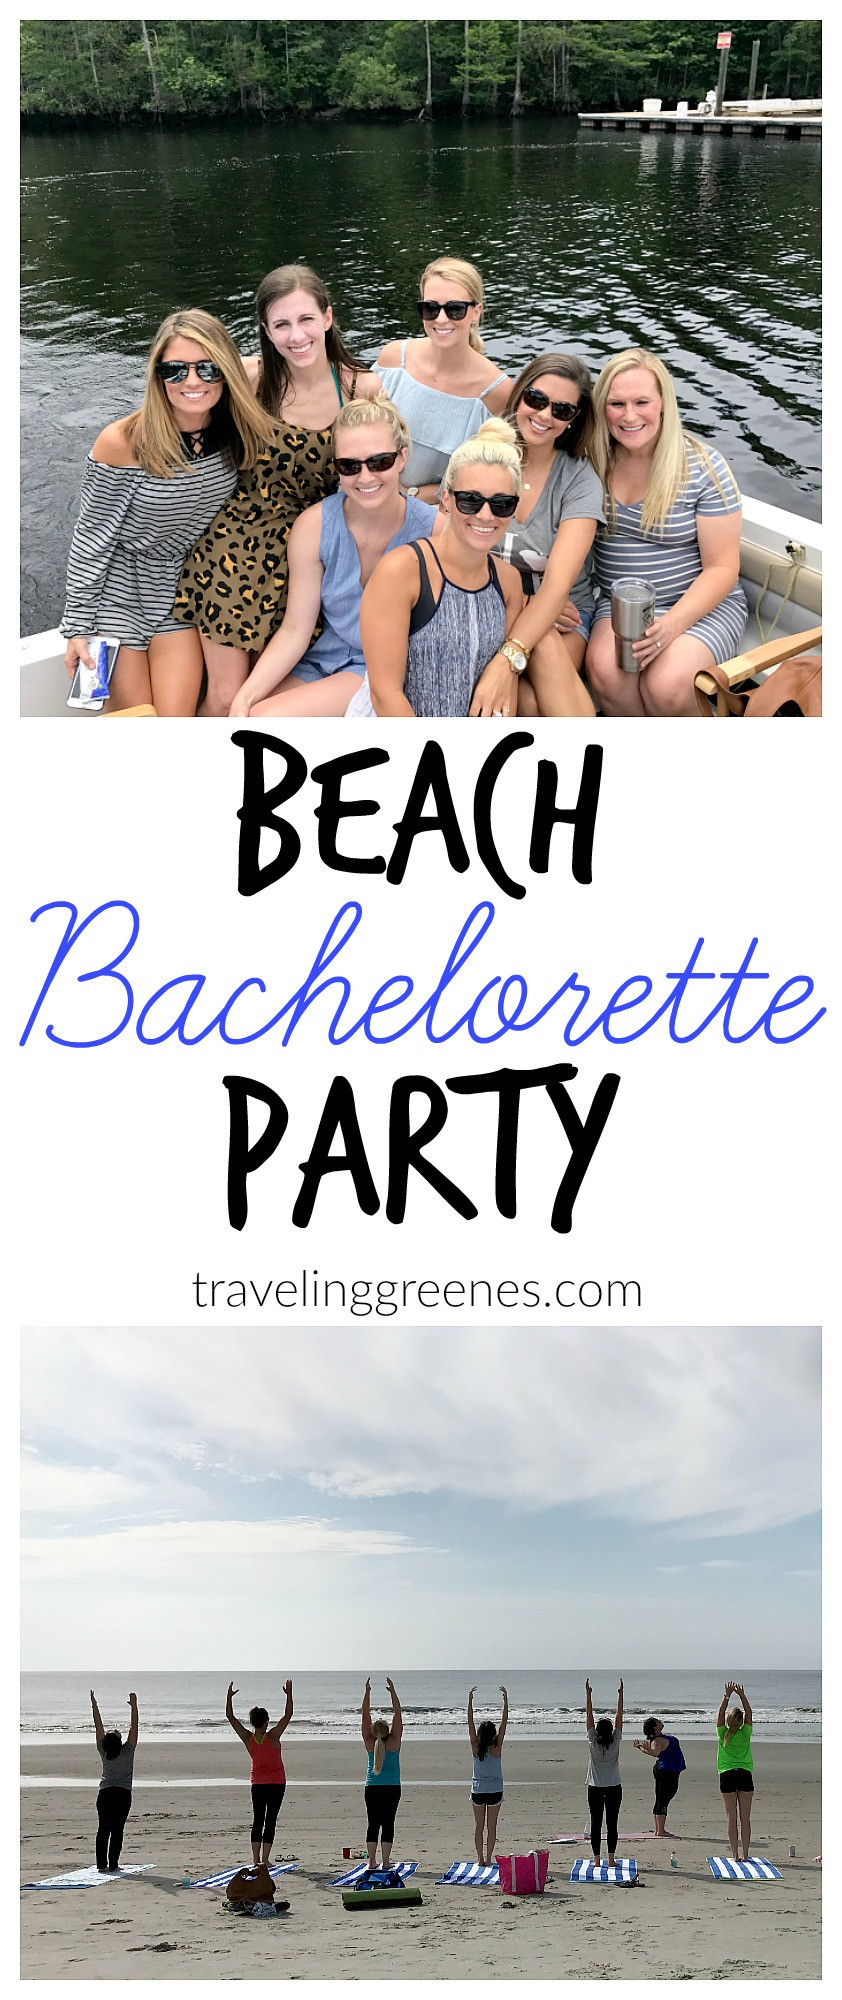 Virginia Beach Bachelorette Party Ideas
 Beach Bachelorette Party Traveling Greenes